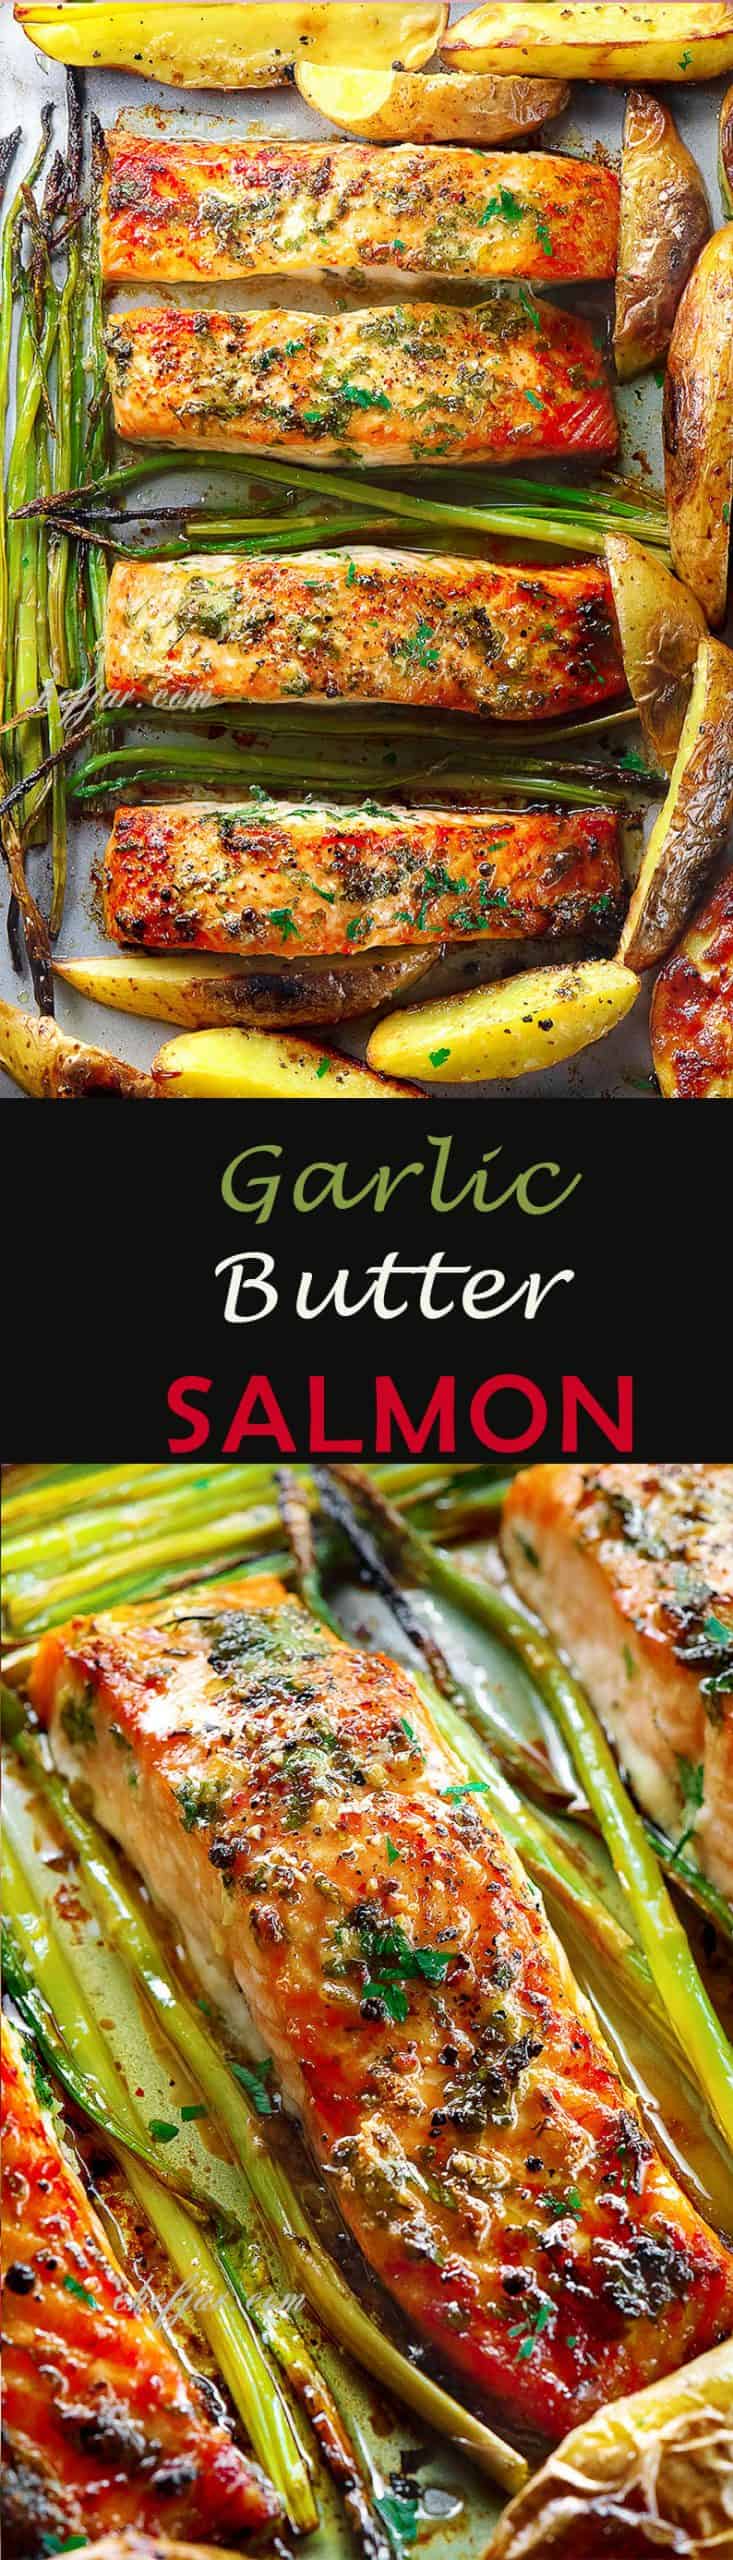 garlic-butter-baked-salmon